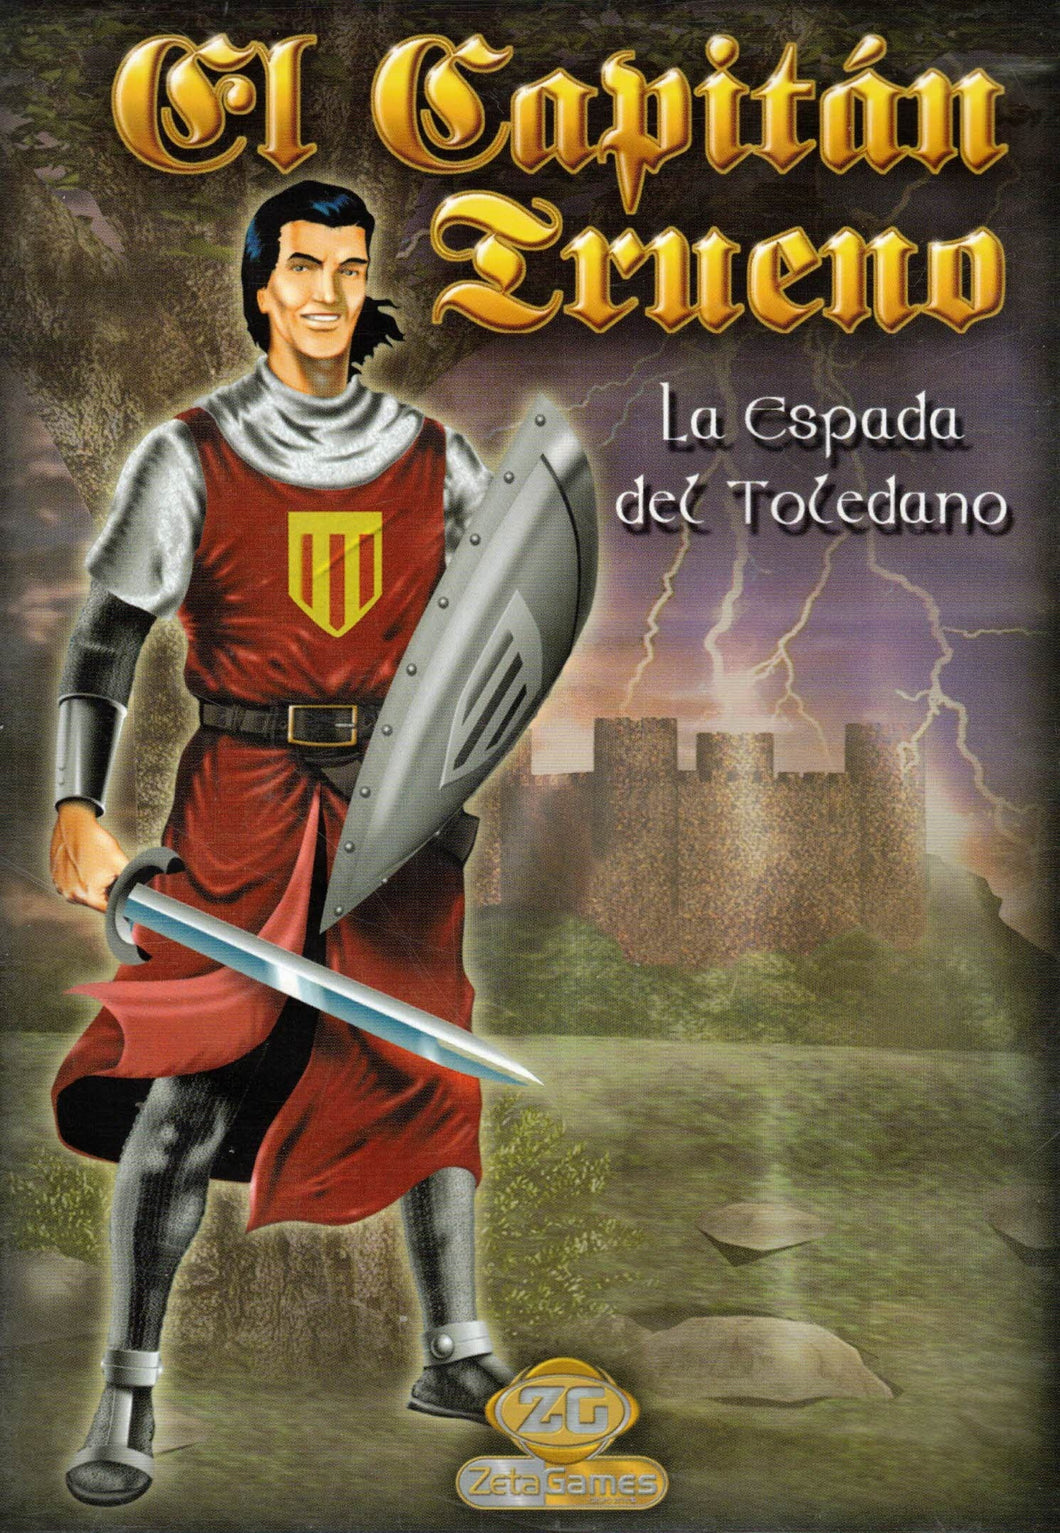 Captain Thunder: The Sword of Toledano (PC CD-ROM) C-202 (very good second hand)